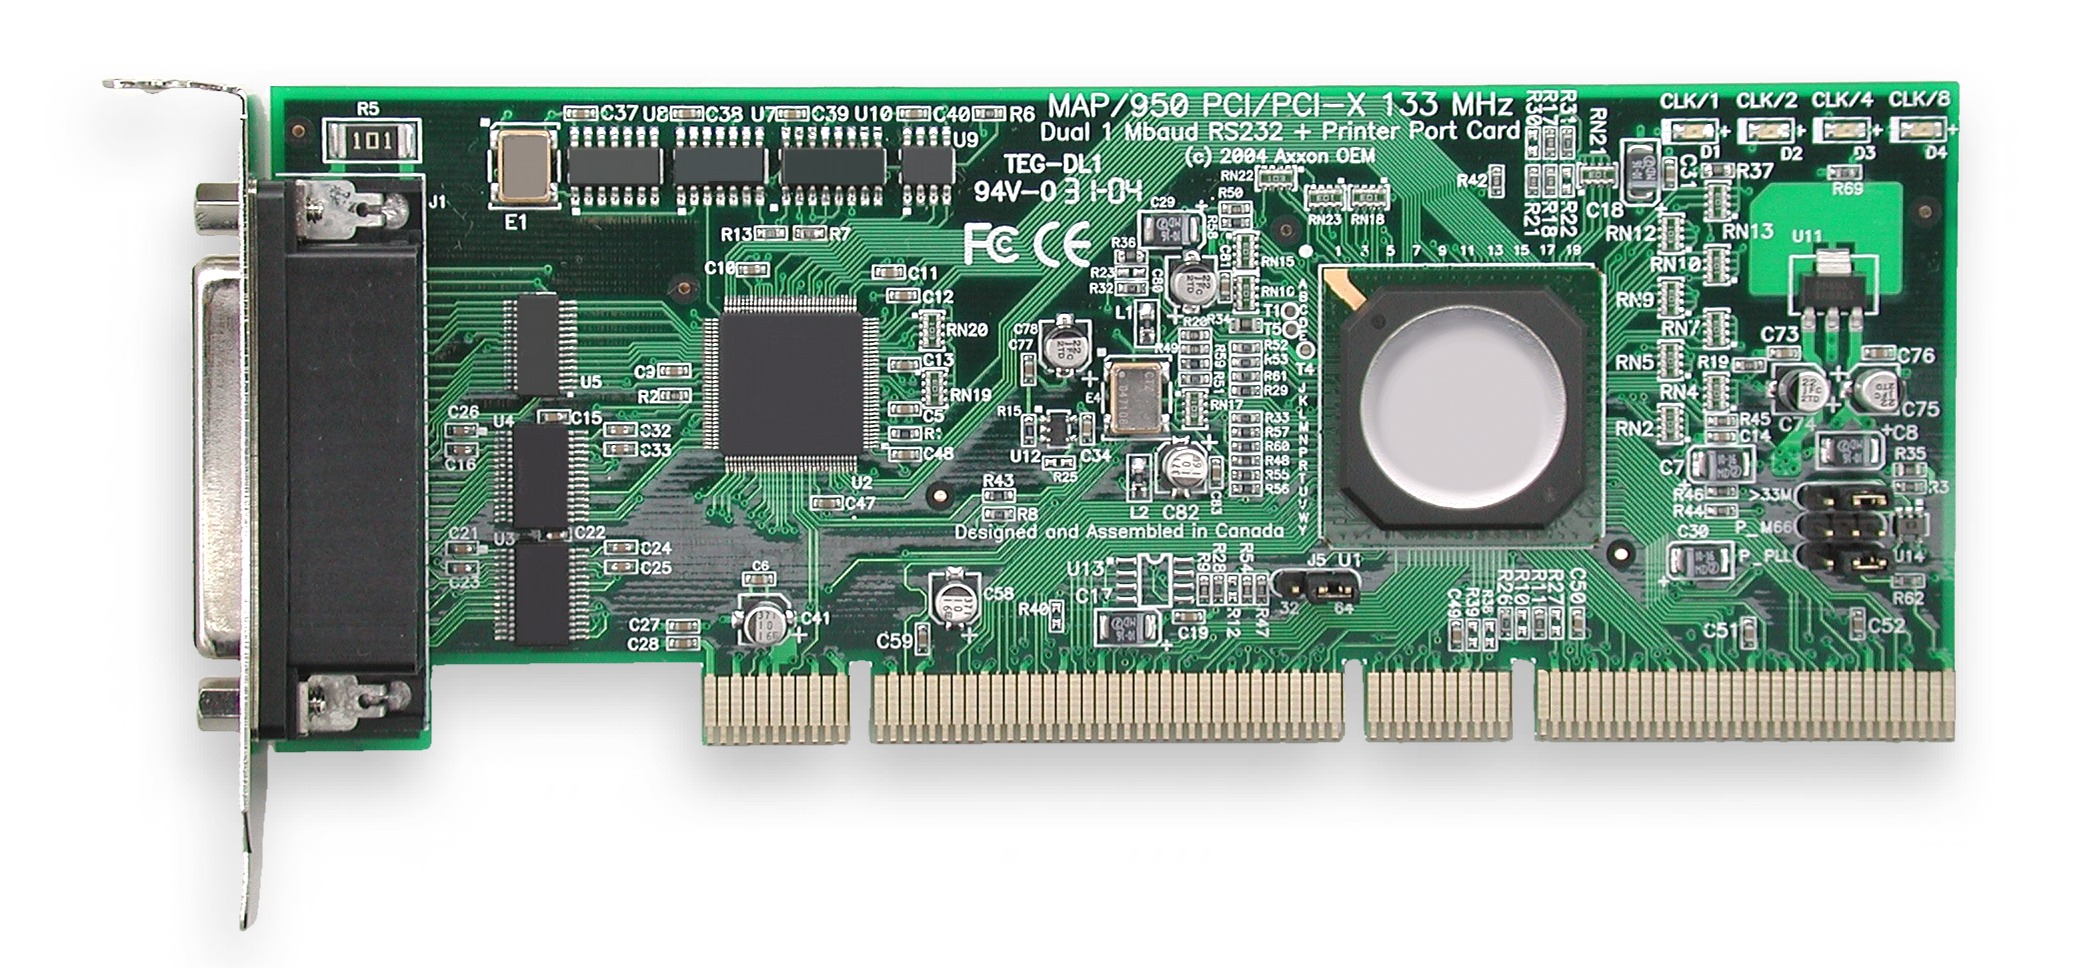 Видеокарта Matrox Millennium g550 126mhz PCI-E 32mb 333mhz 64 bit 2xdvi. Переходник PCI-X Slots 133 MHZ. PCI 64 bit. PCI x1 u2.